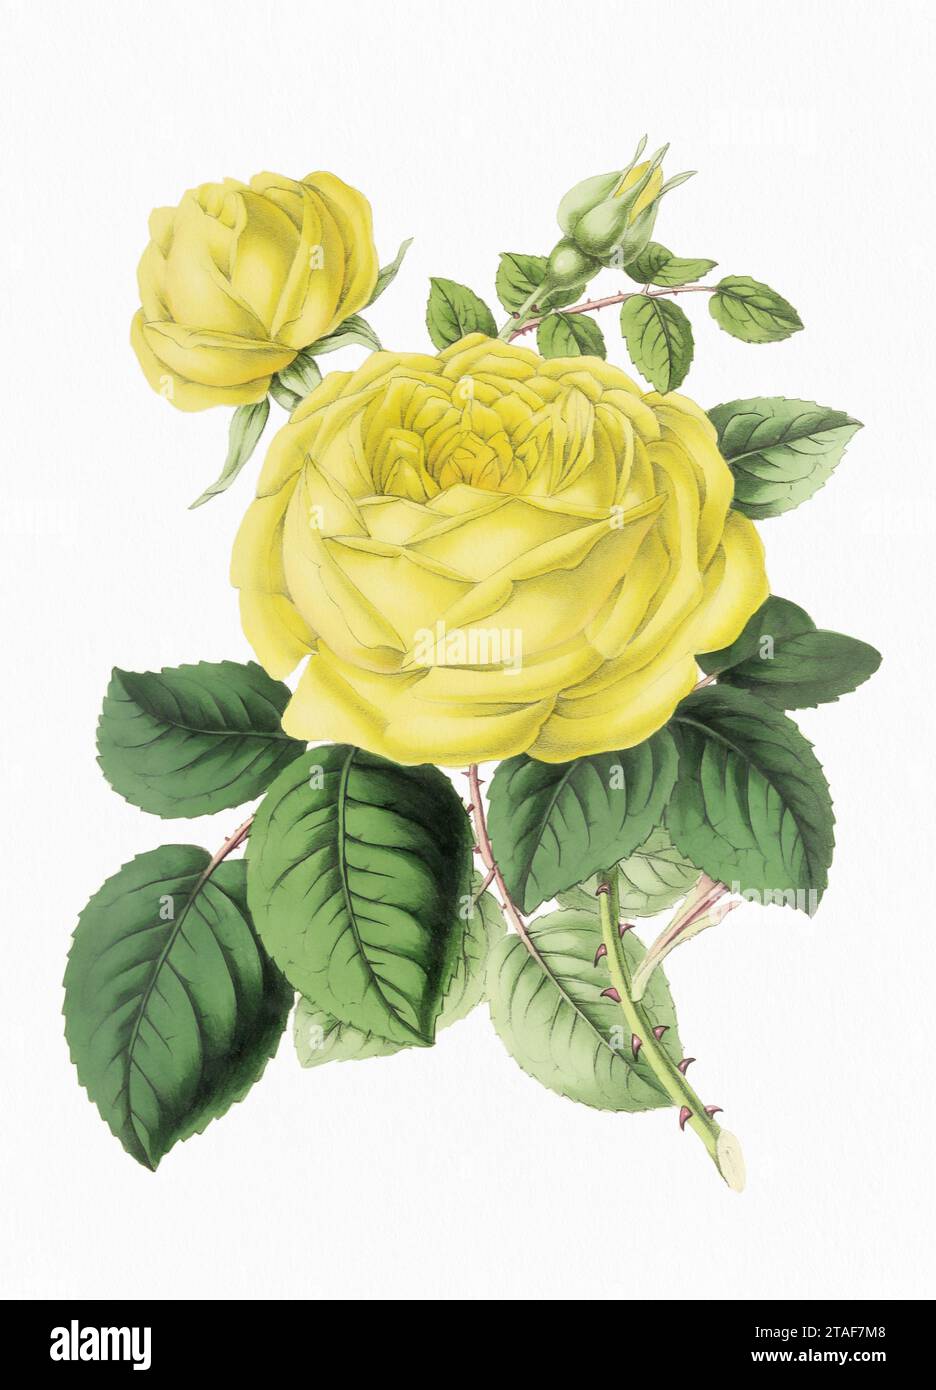 Rose Flower. Digital vintage-style flower illustration on a paper textured white background. Stock Photo